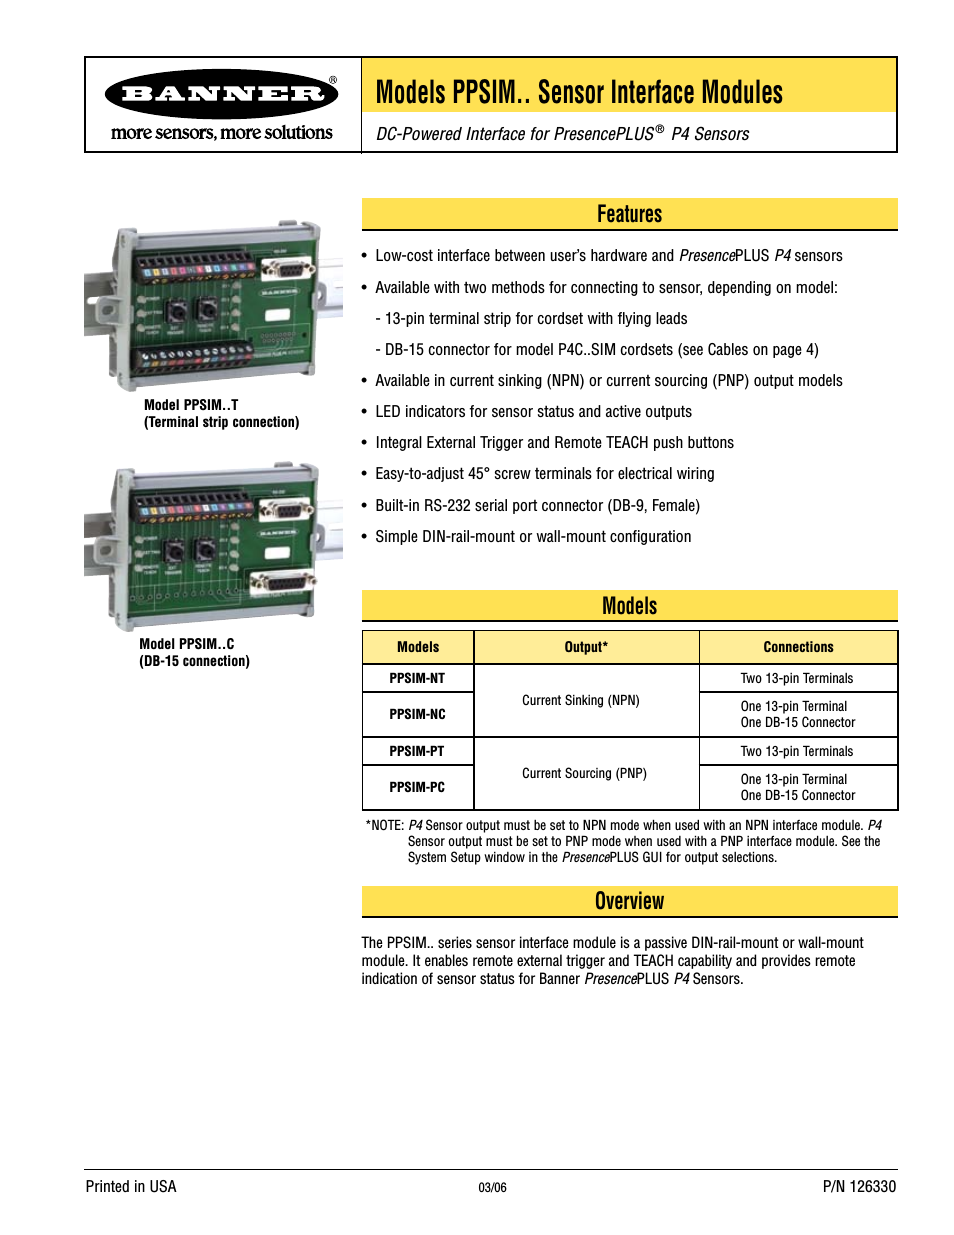 PPSIM Sensor Interface Modules